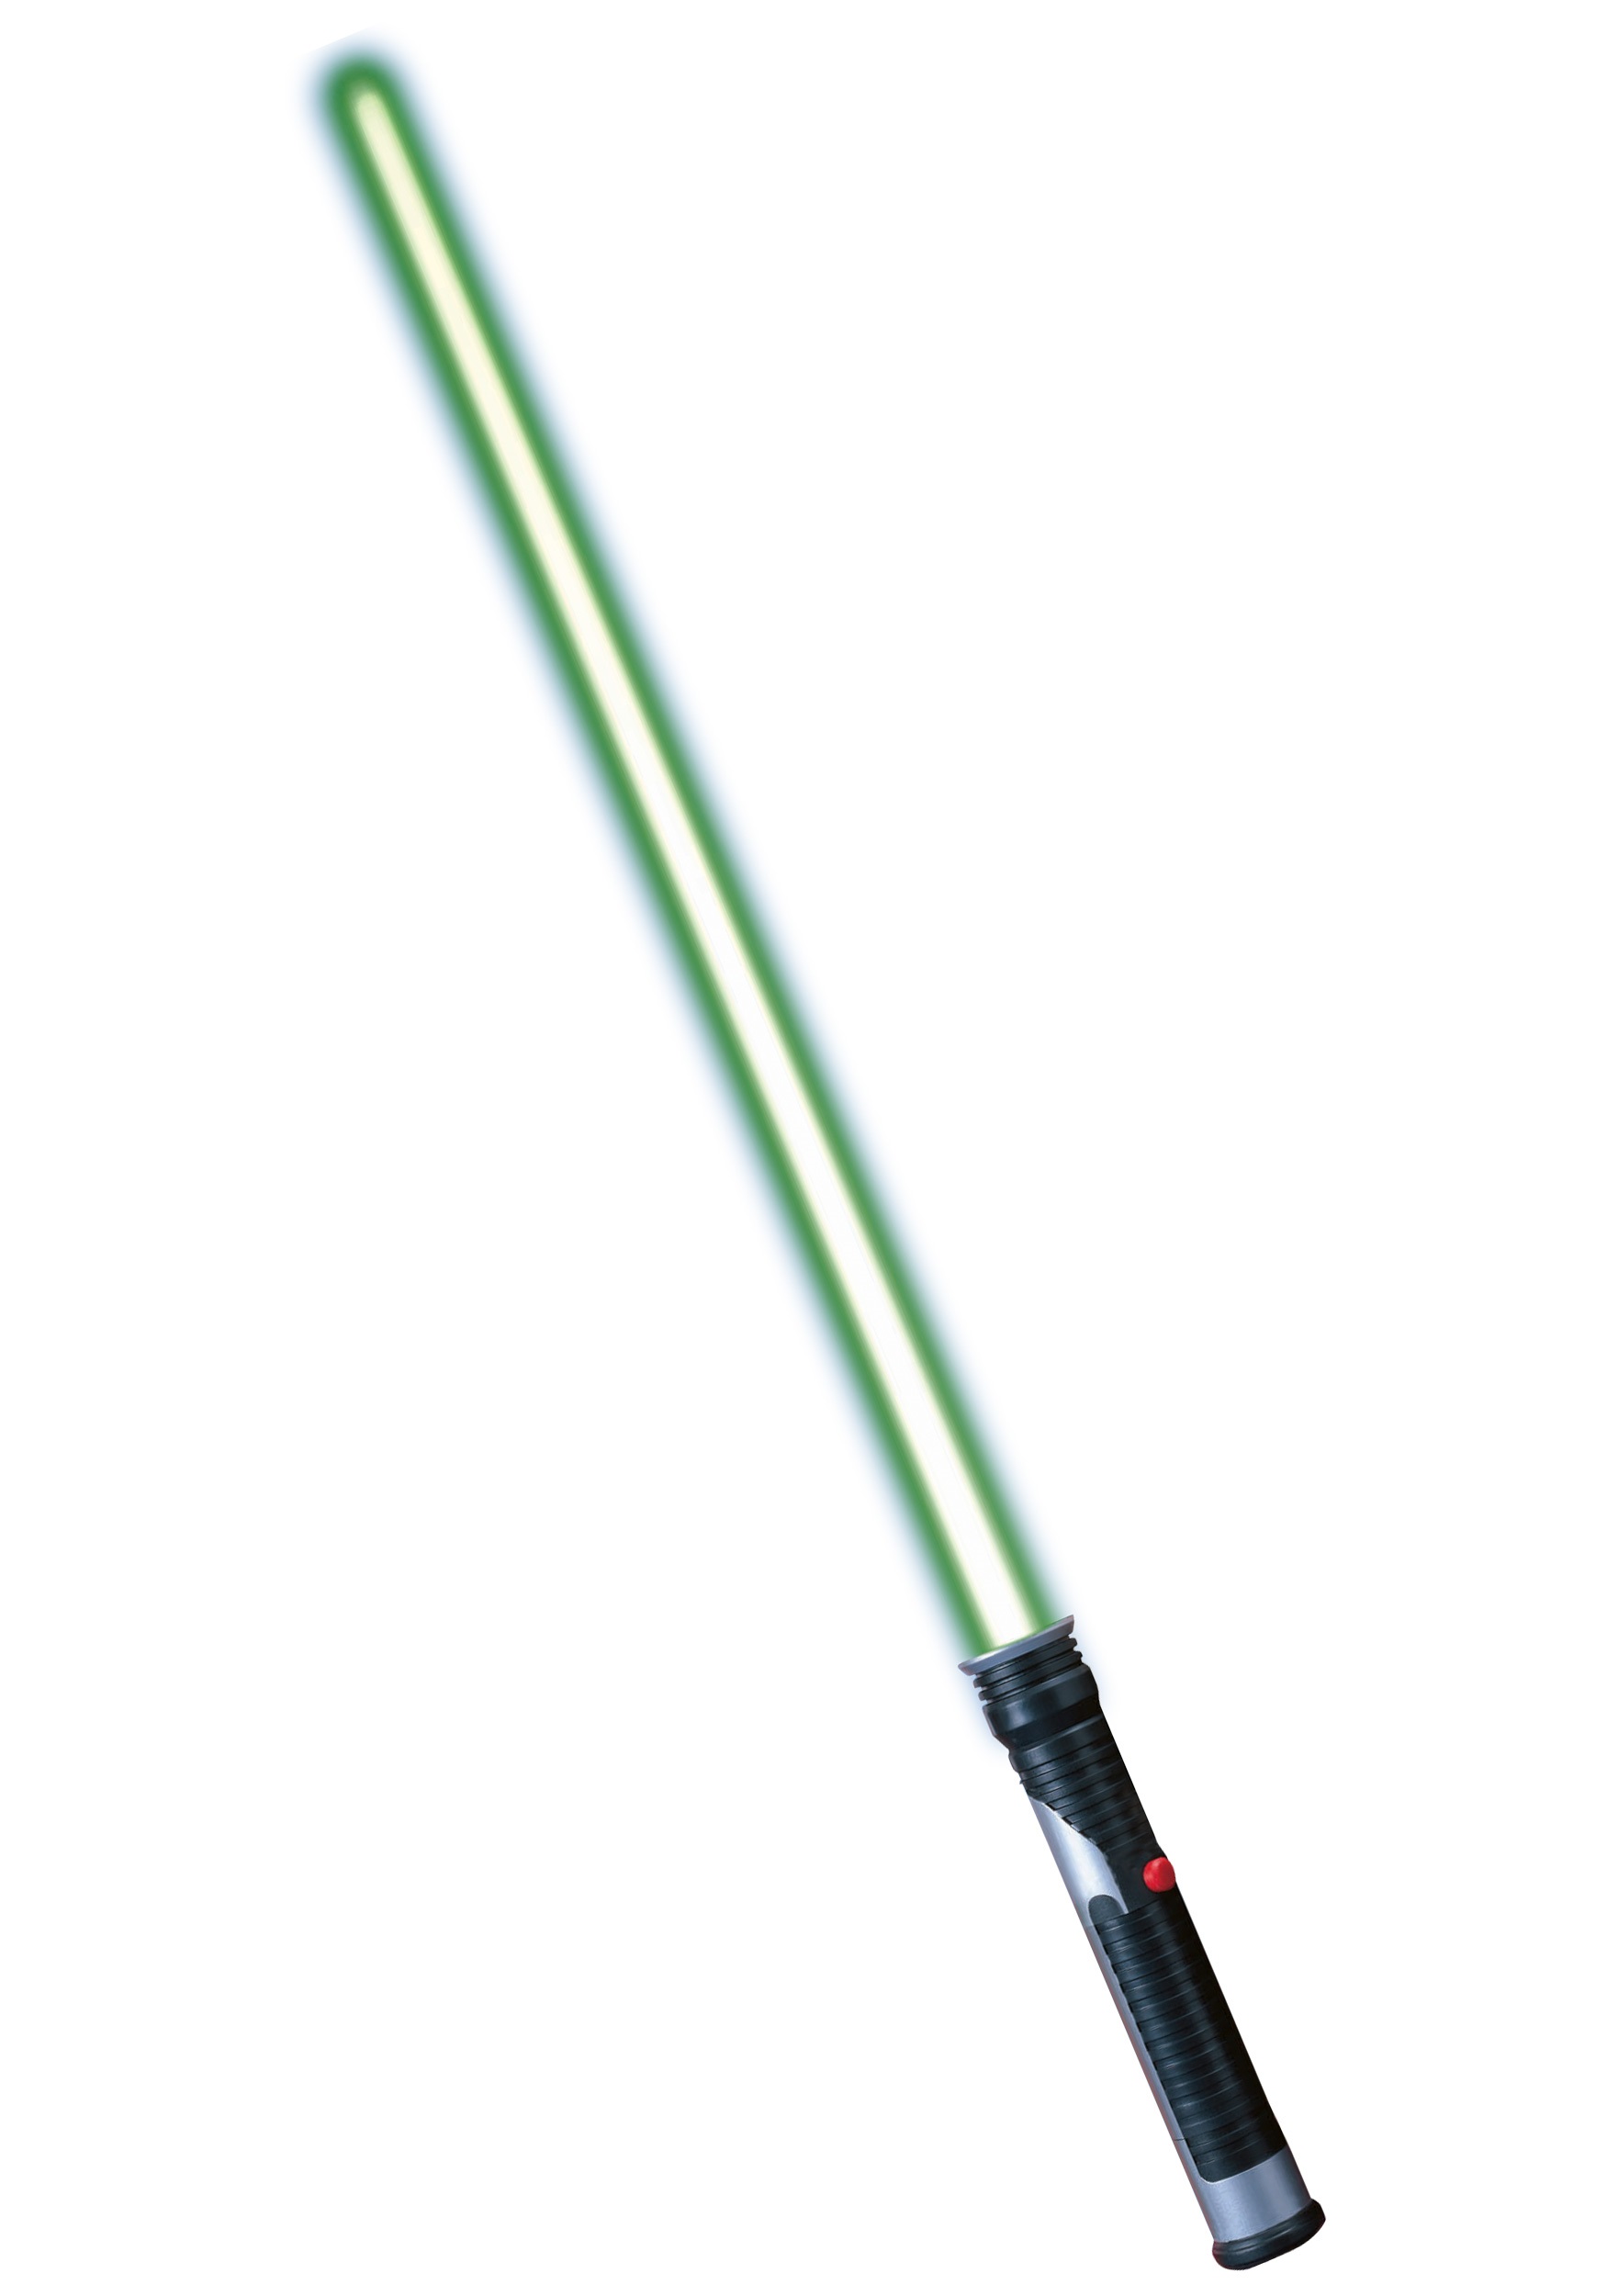 NEW RUBIES Star Wars Darth Vader Lightsaber Green Jedi COSTUME ACCESSORY.